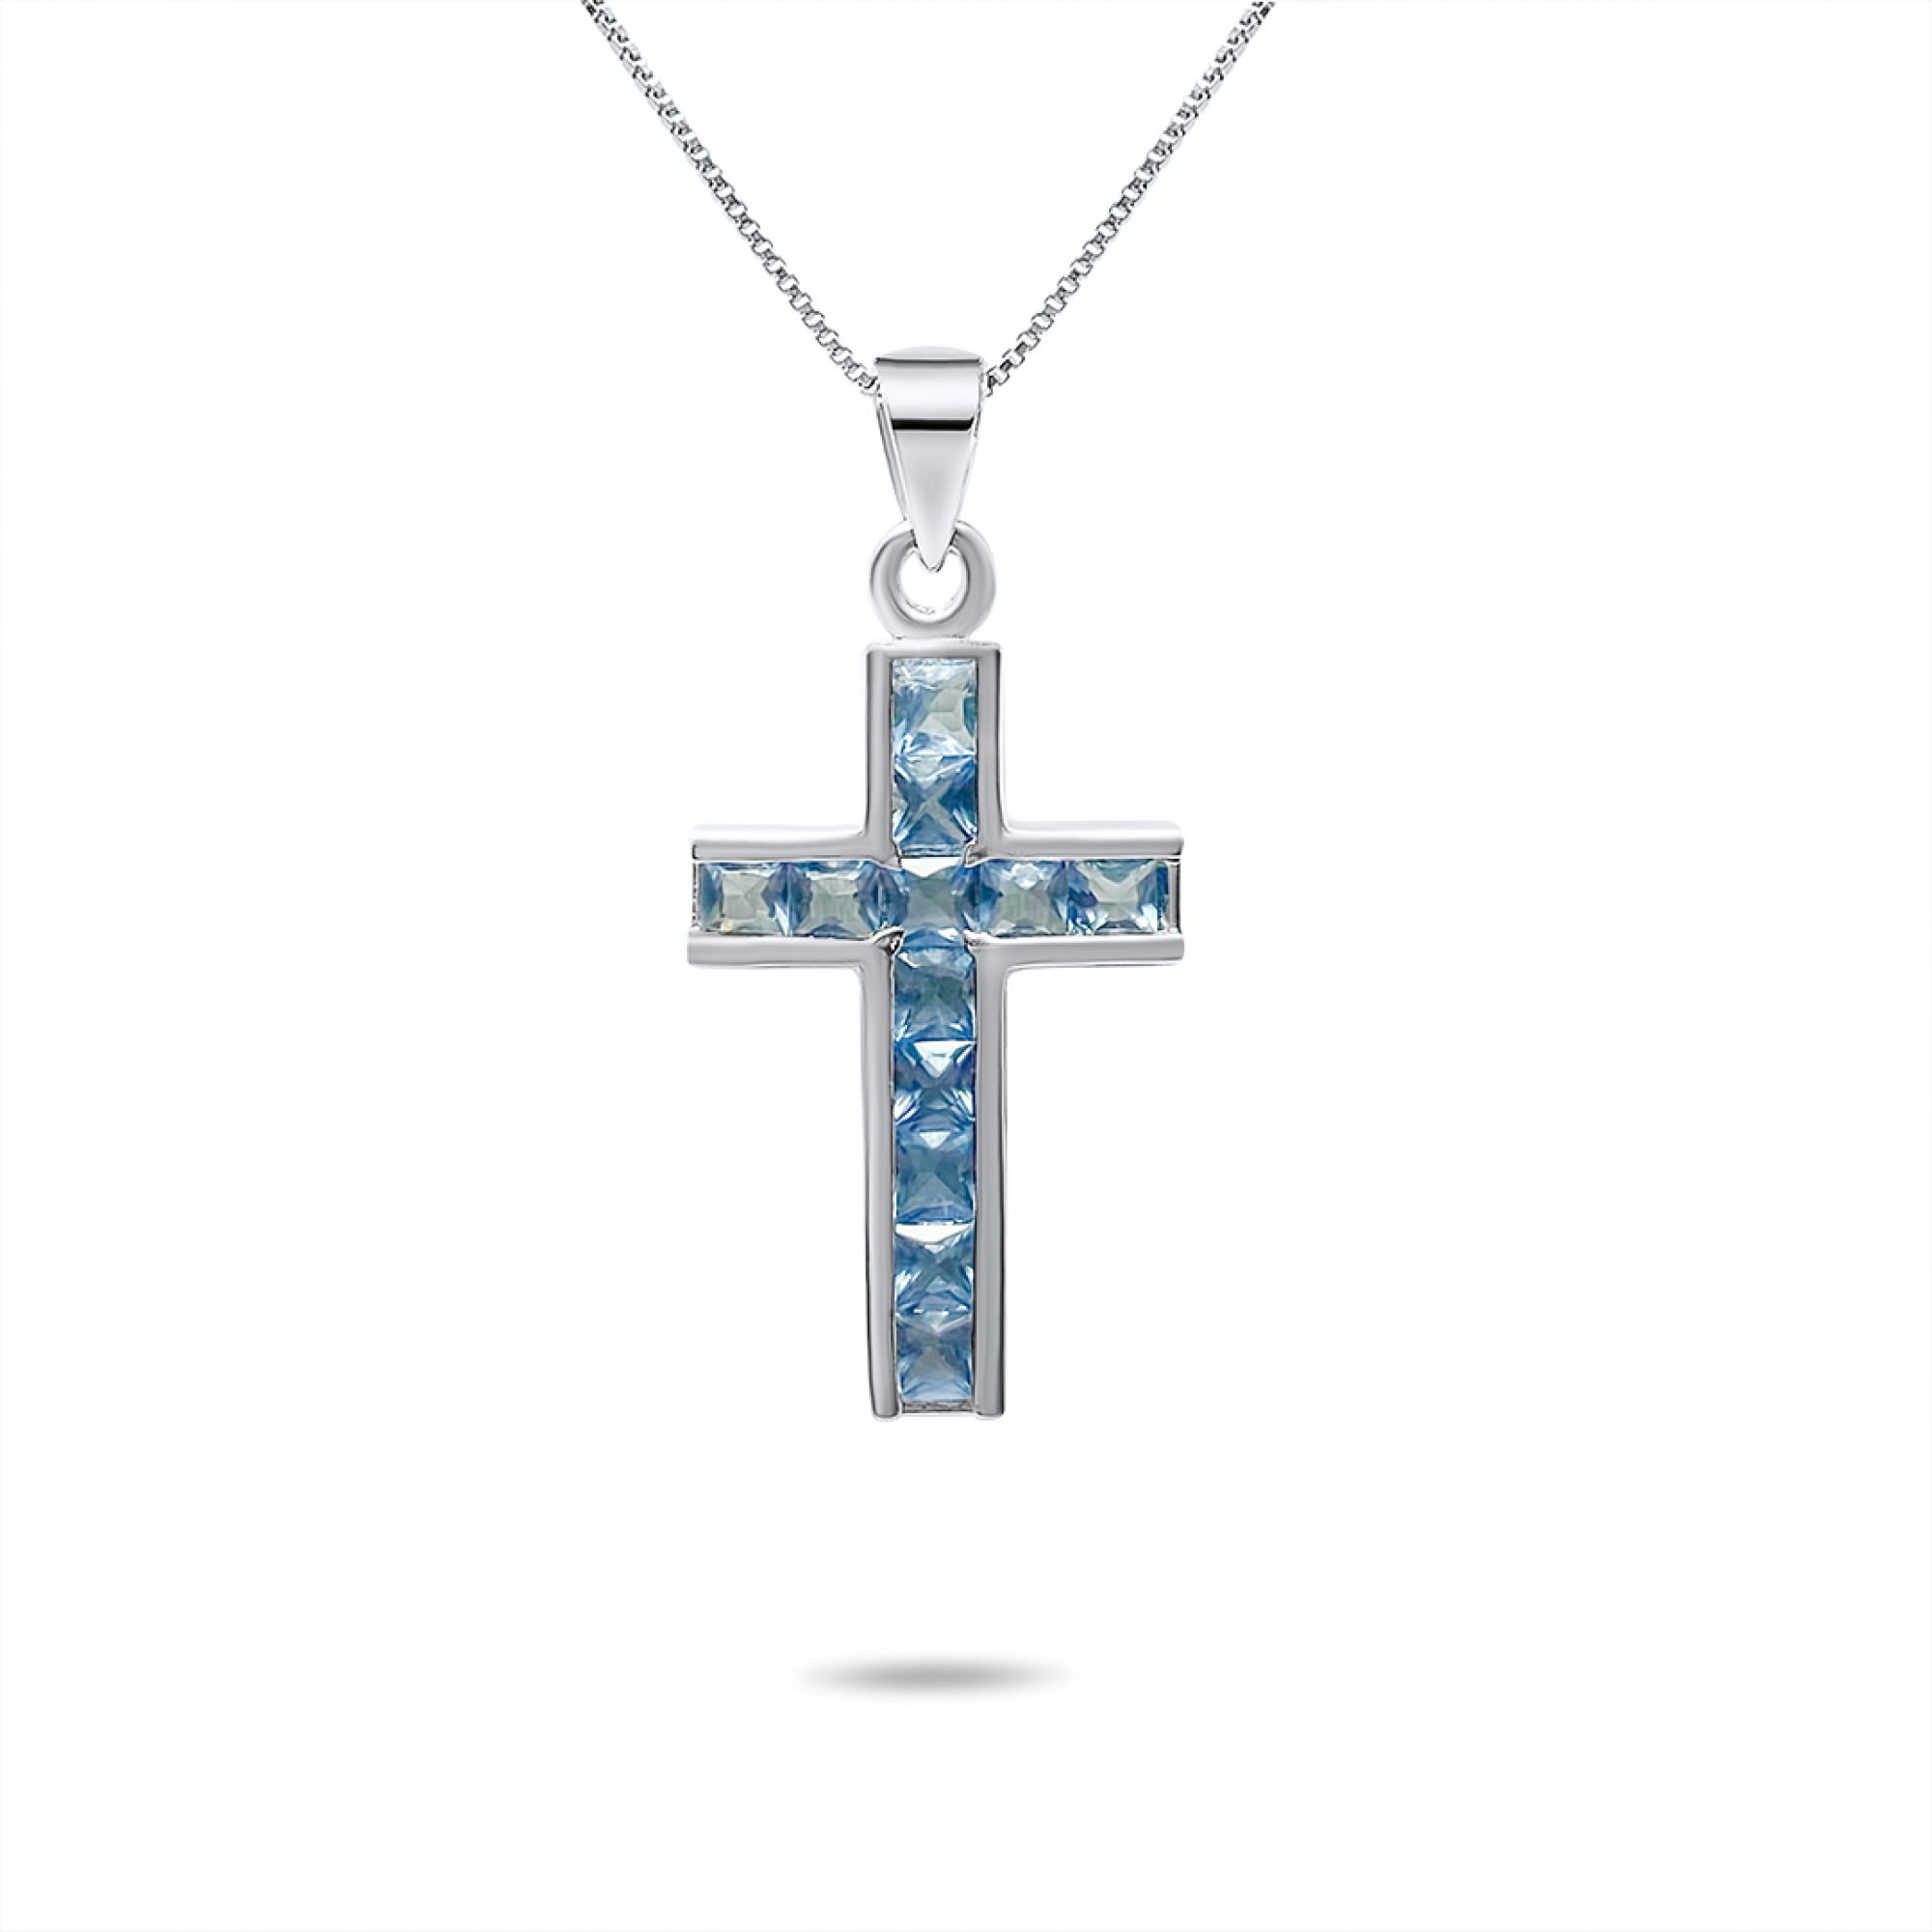 Cross necklace with aquamarine stones